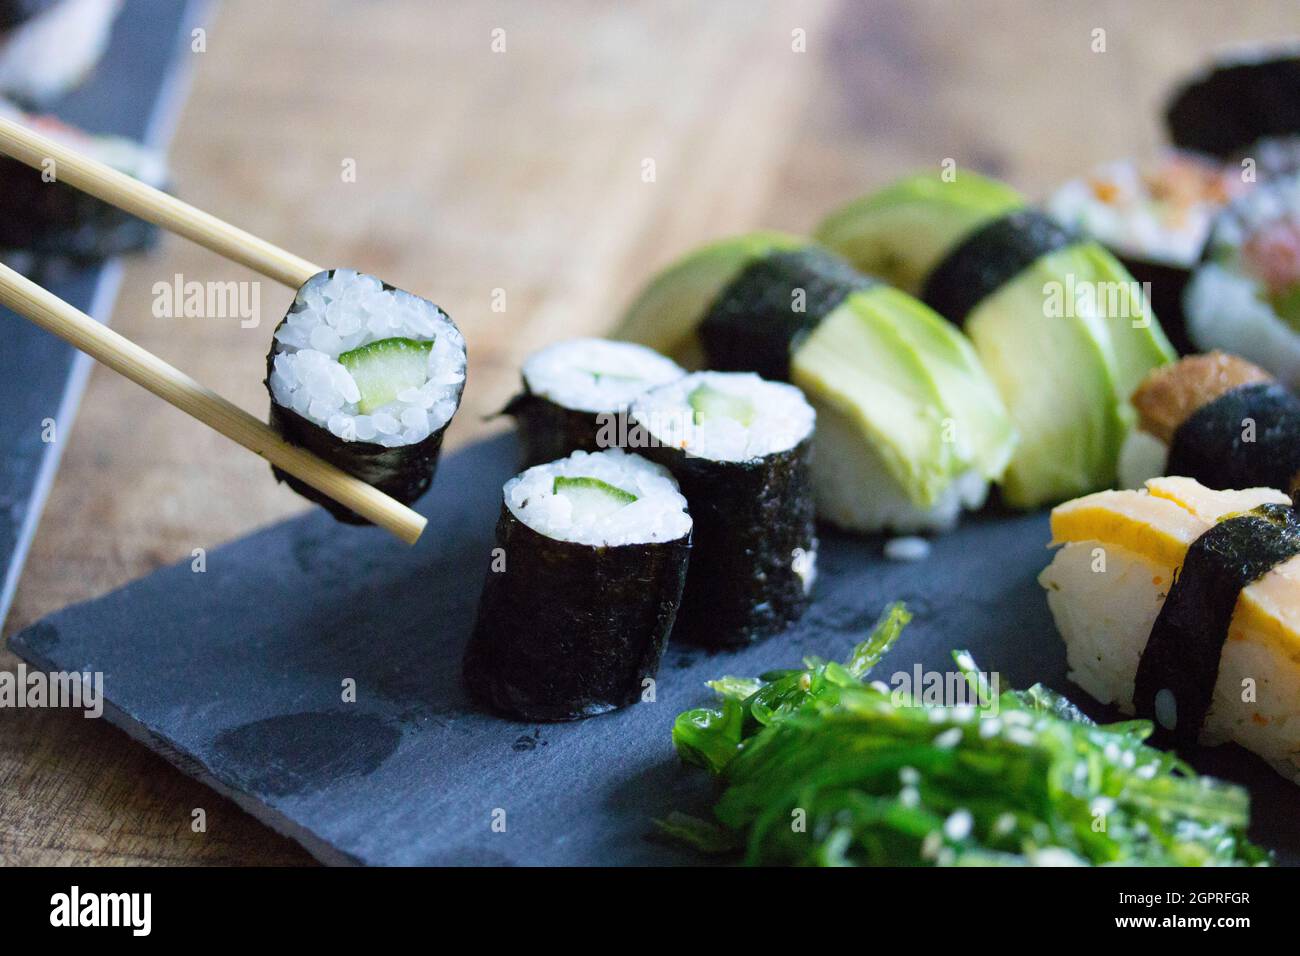 Norimaki Makki Sushi Roll Maker